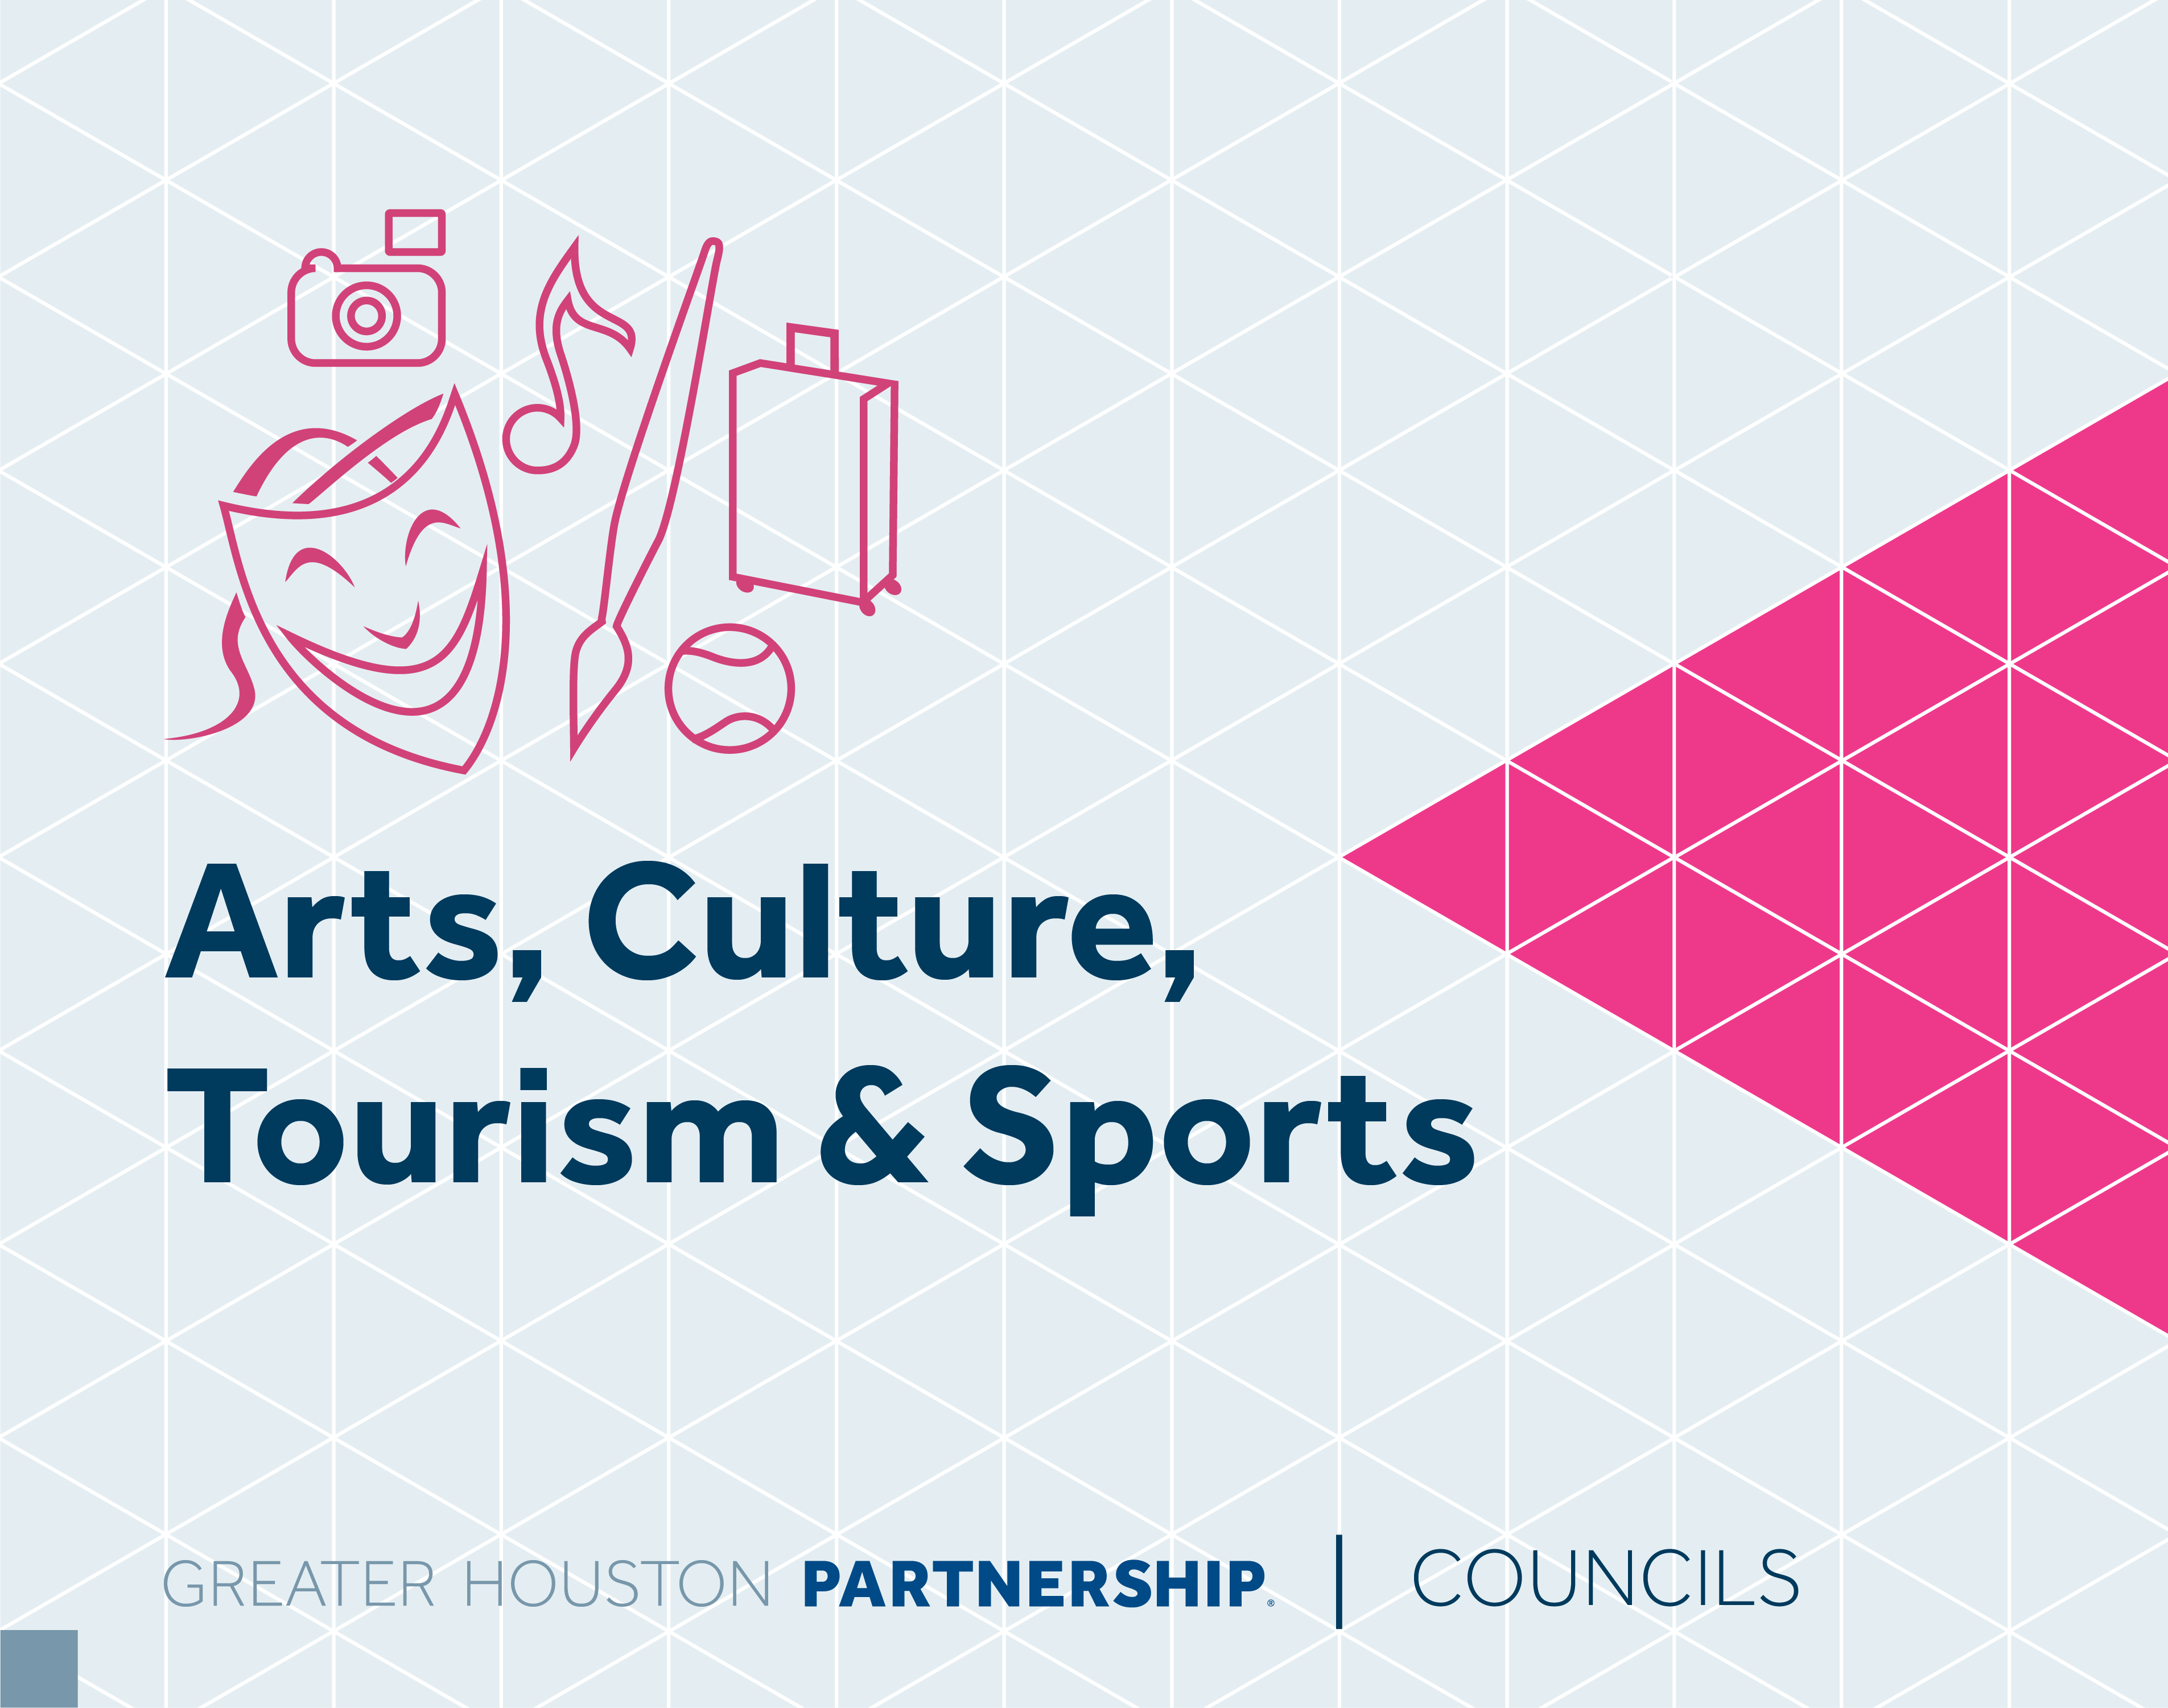 Arts, Culture, Tourism and Sports Council